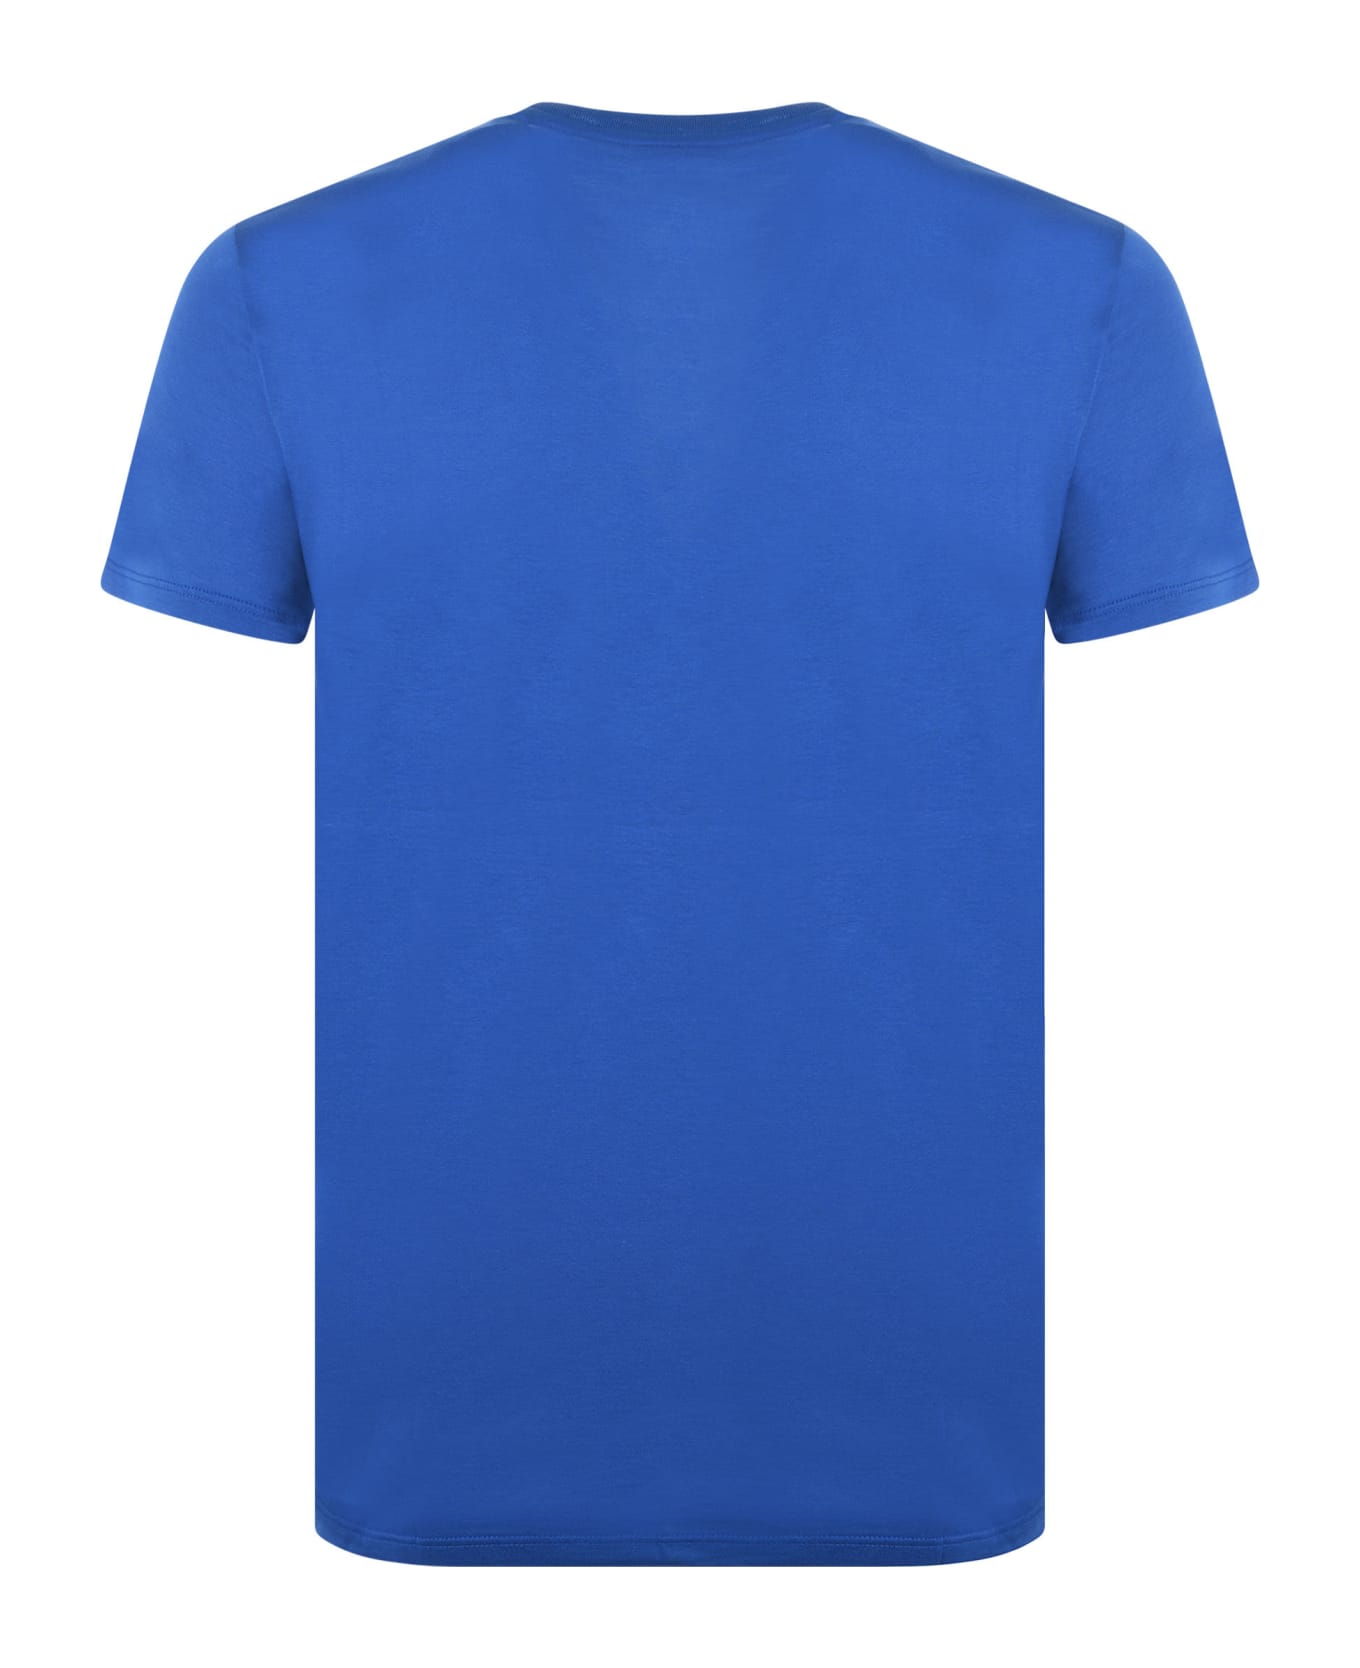 Lacoste T-shirt - Blu cobalto シャツ